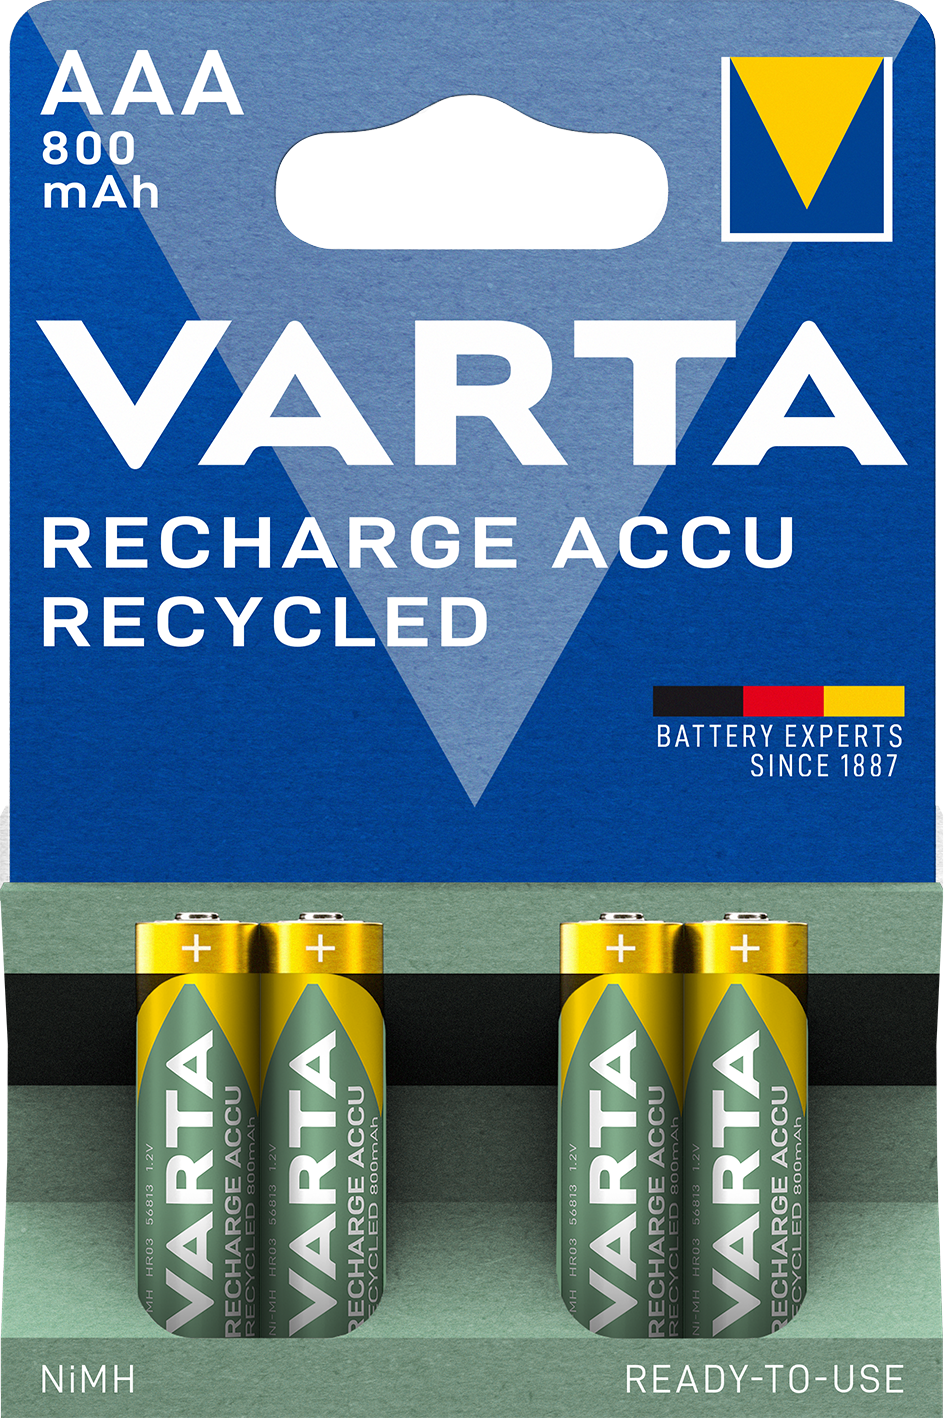 VARTA RECHARGE ACCU Recycled AAA 800mAh Blister 4